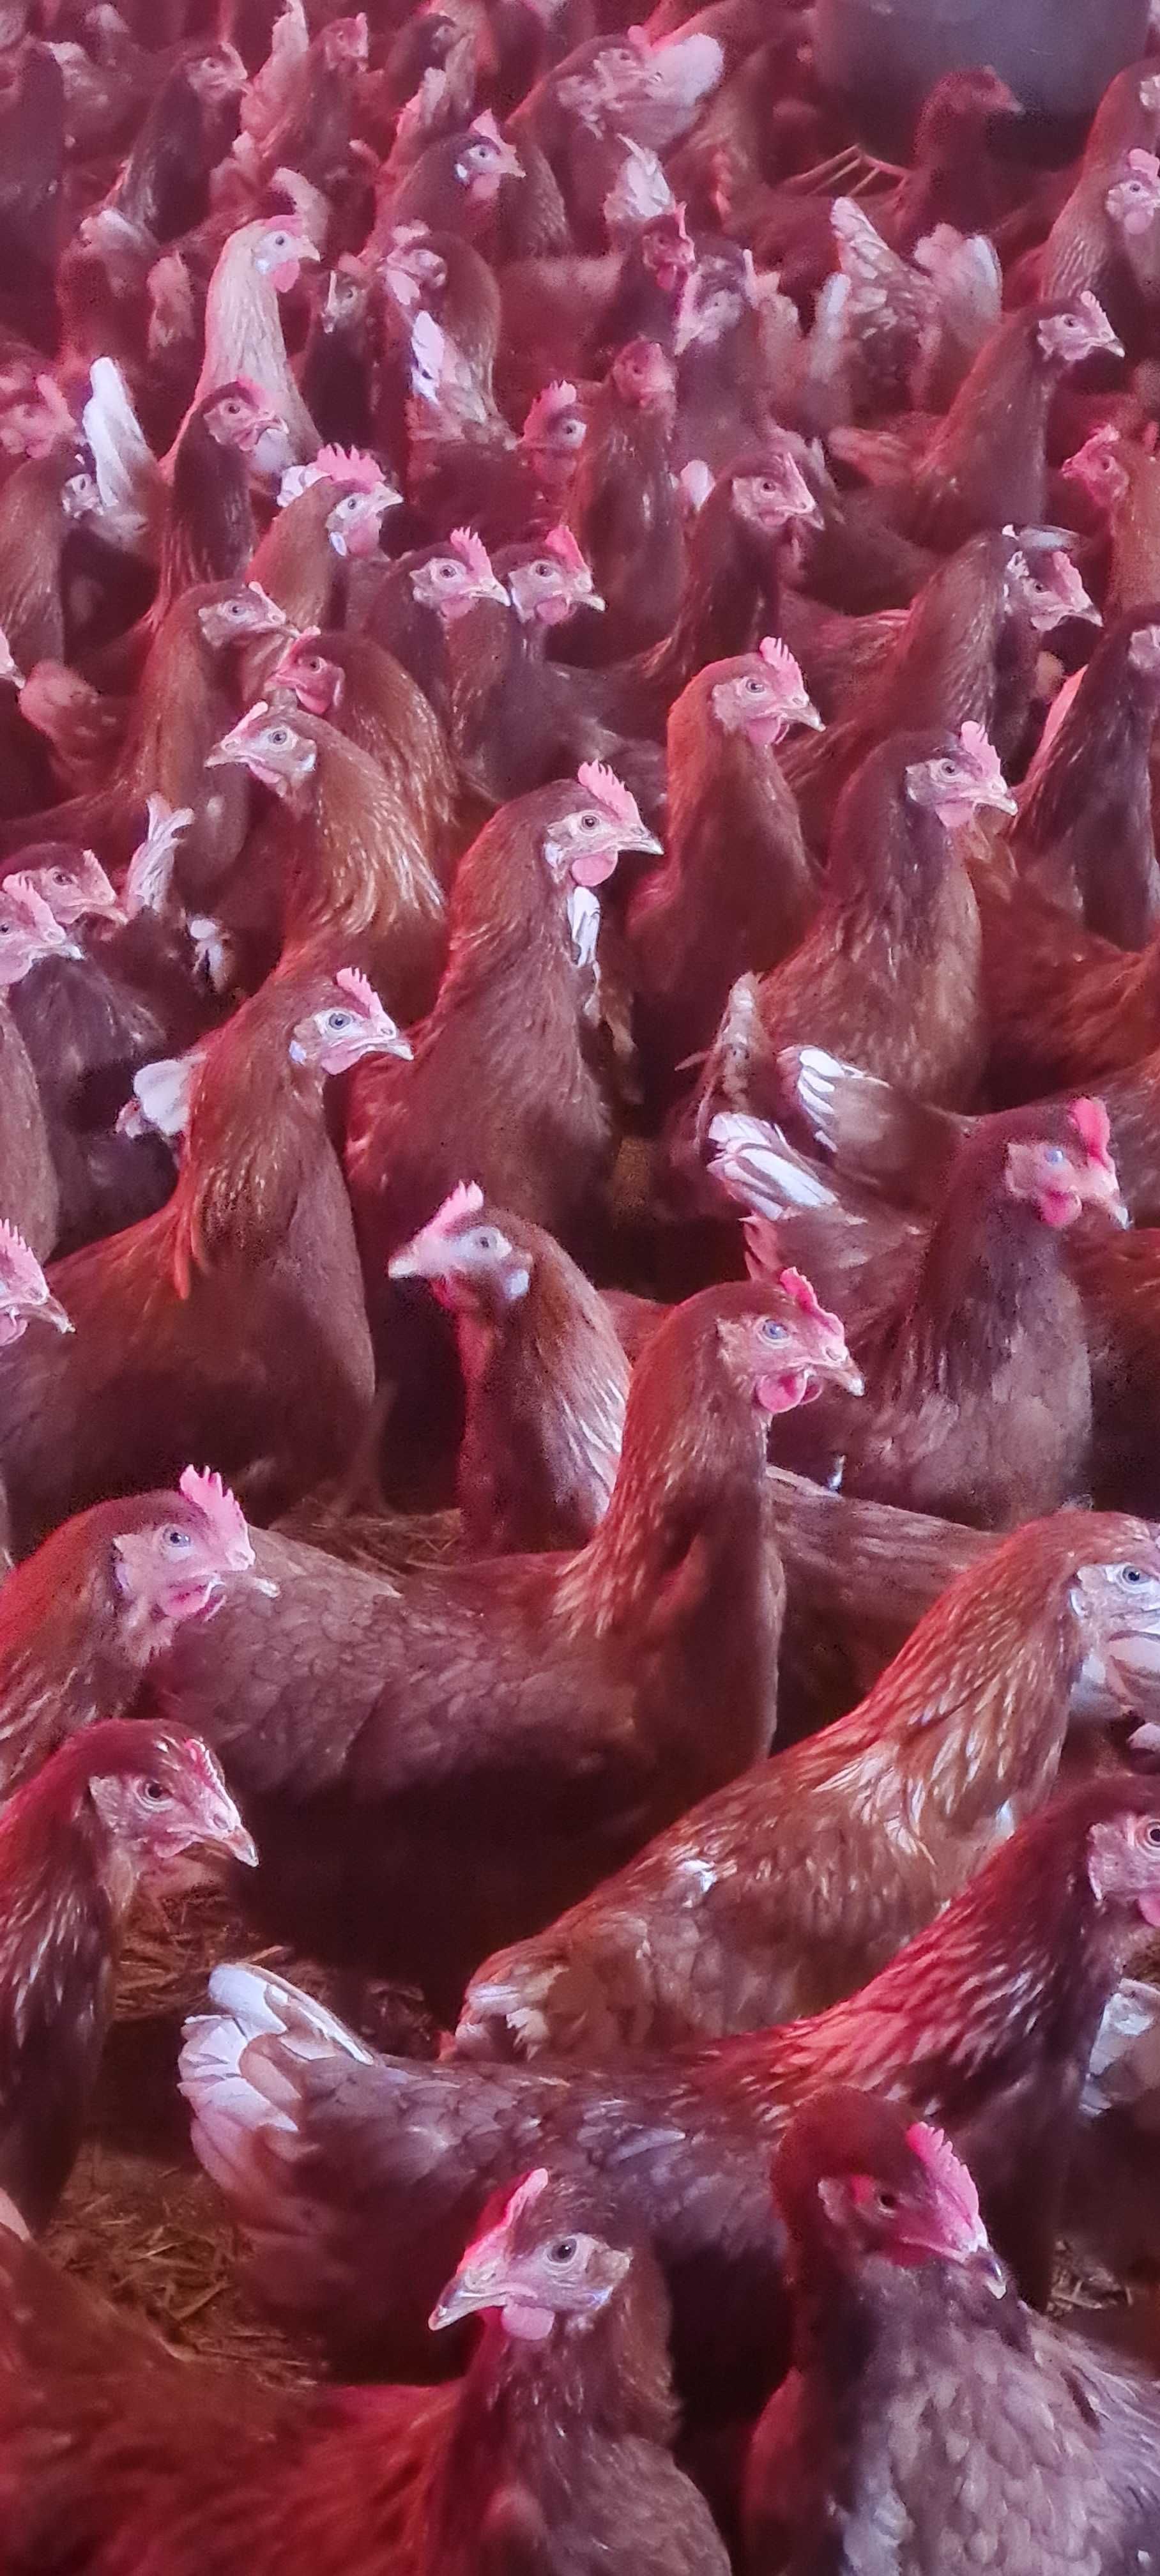 Kury kurki kurczaki nioski młode z jajkami.Rosa1 Dominant Leghorn JAJA